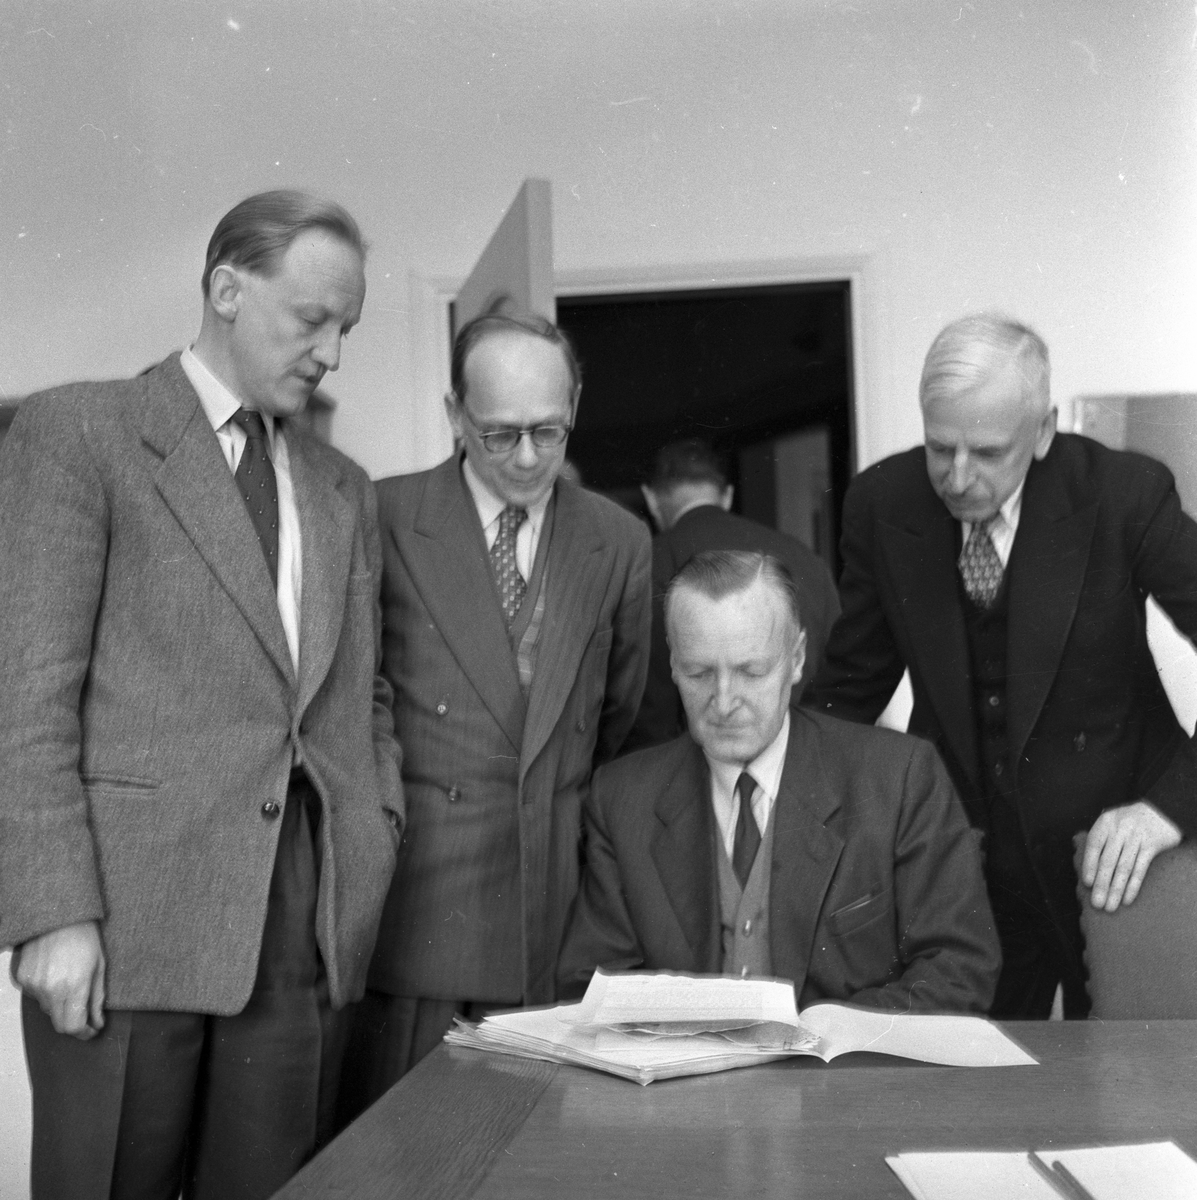 Møte i Fiskeridirektoratet. Fire menn, bl.a. Gunvald Hauge. Sellag.
Fotografert 1958.